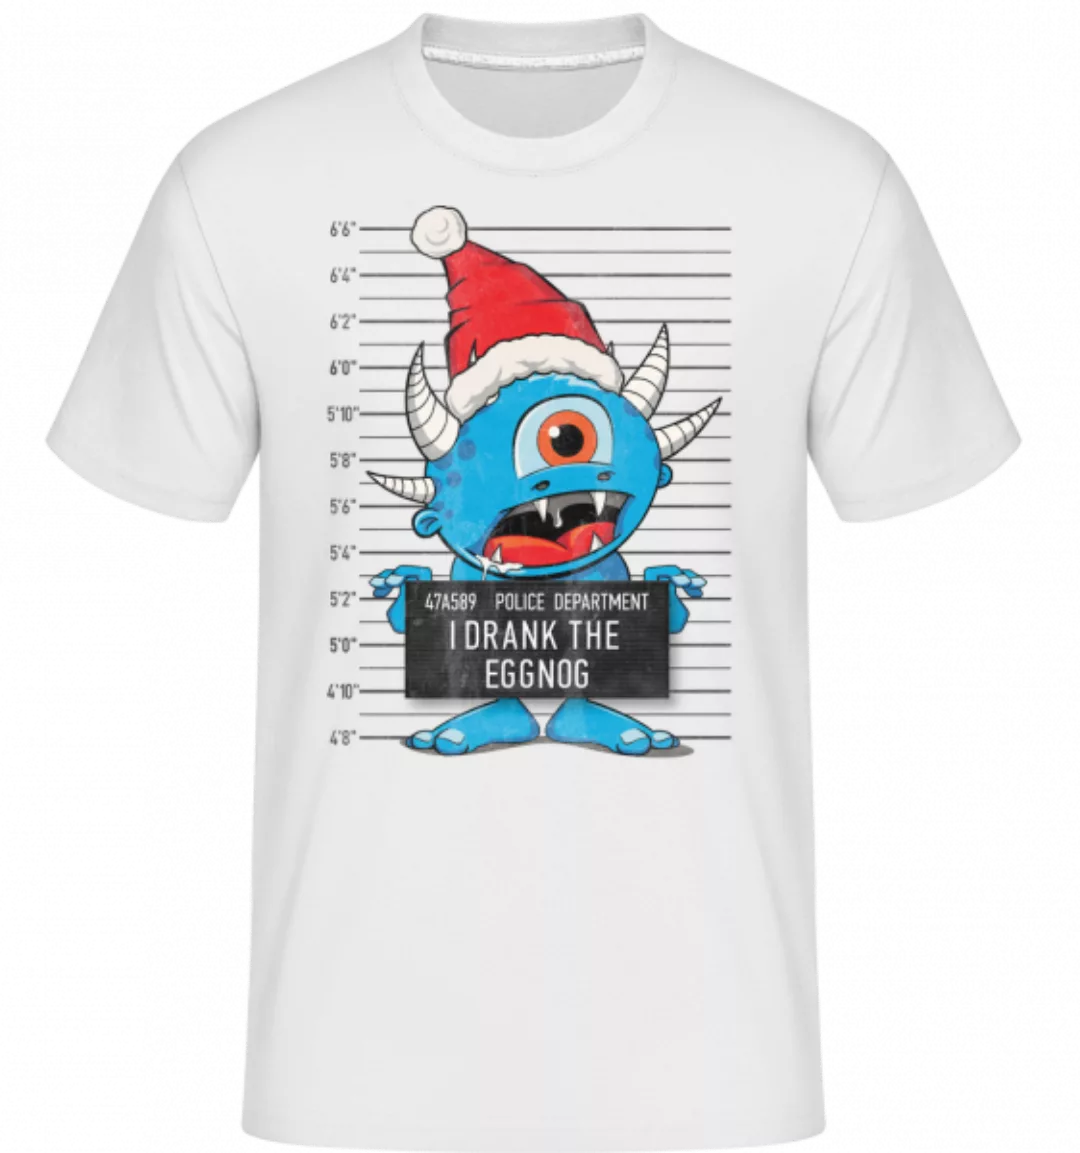 Monster Weihnachten Verbrecherfoto · Shirtinator Männer T-Shirt günstig online kaufen